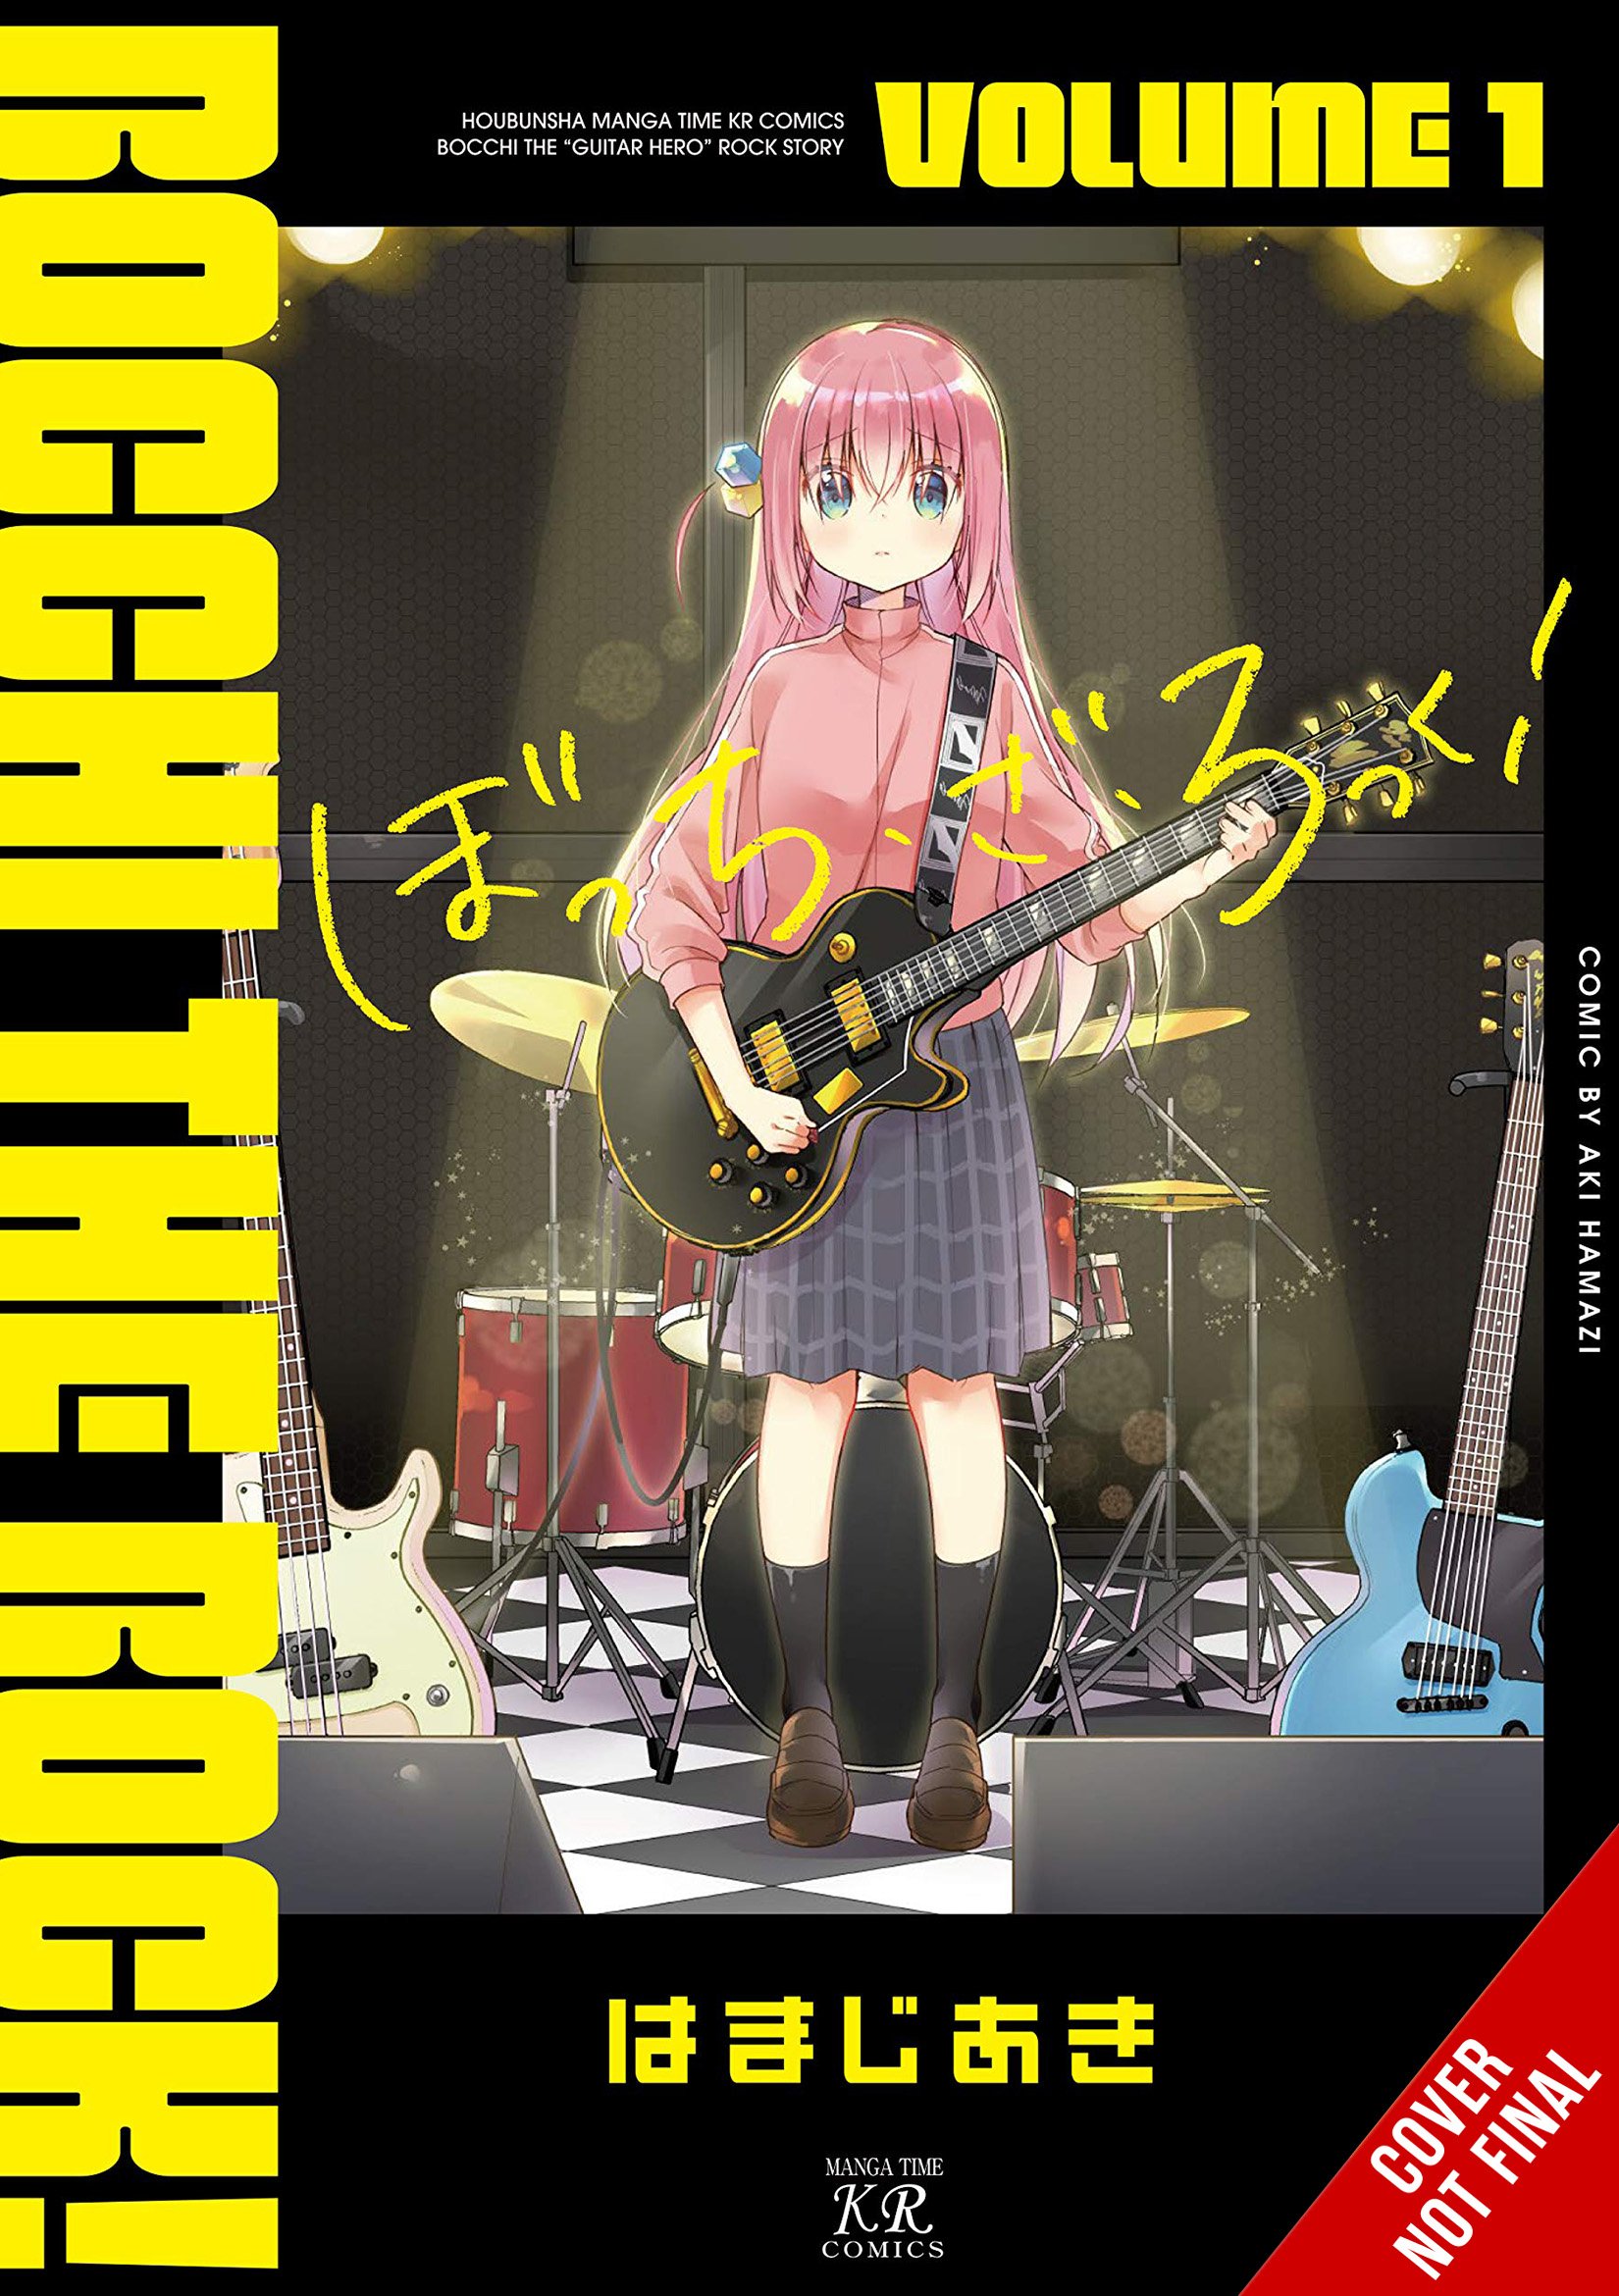 Bocchi the Rock manga now has reached 2 million copies circulation